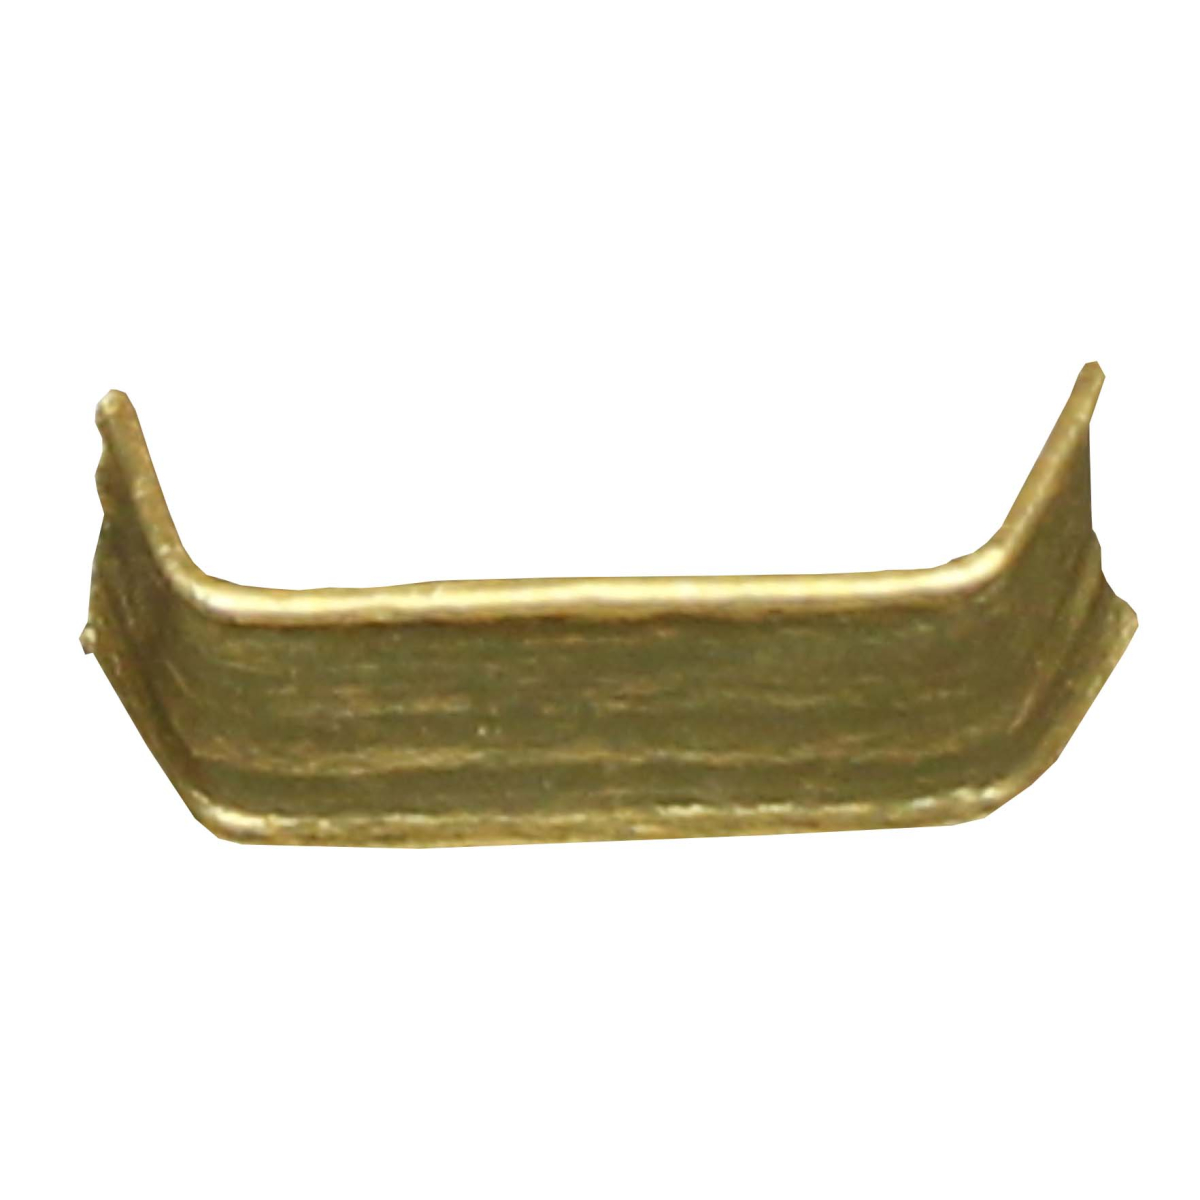 CLIPSE vorgebogen in  u-Form | gold
60 mm x 8 mm / 2-Draht 0,50 mm